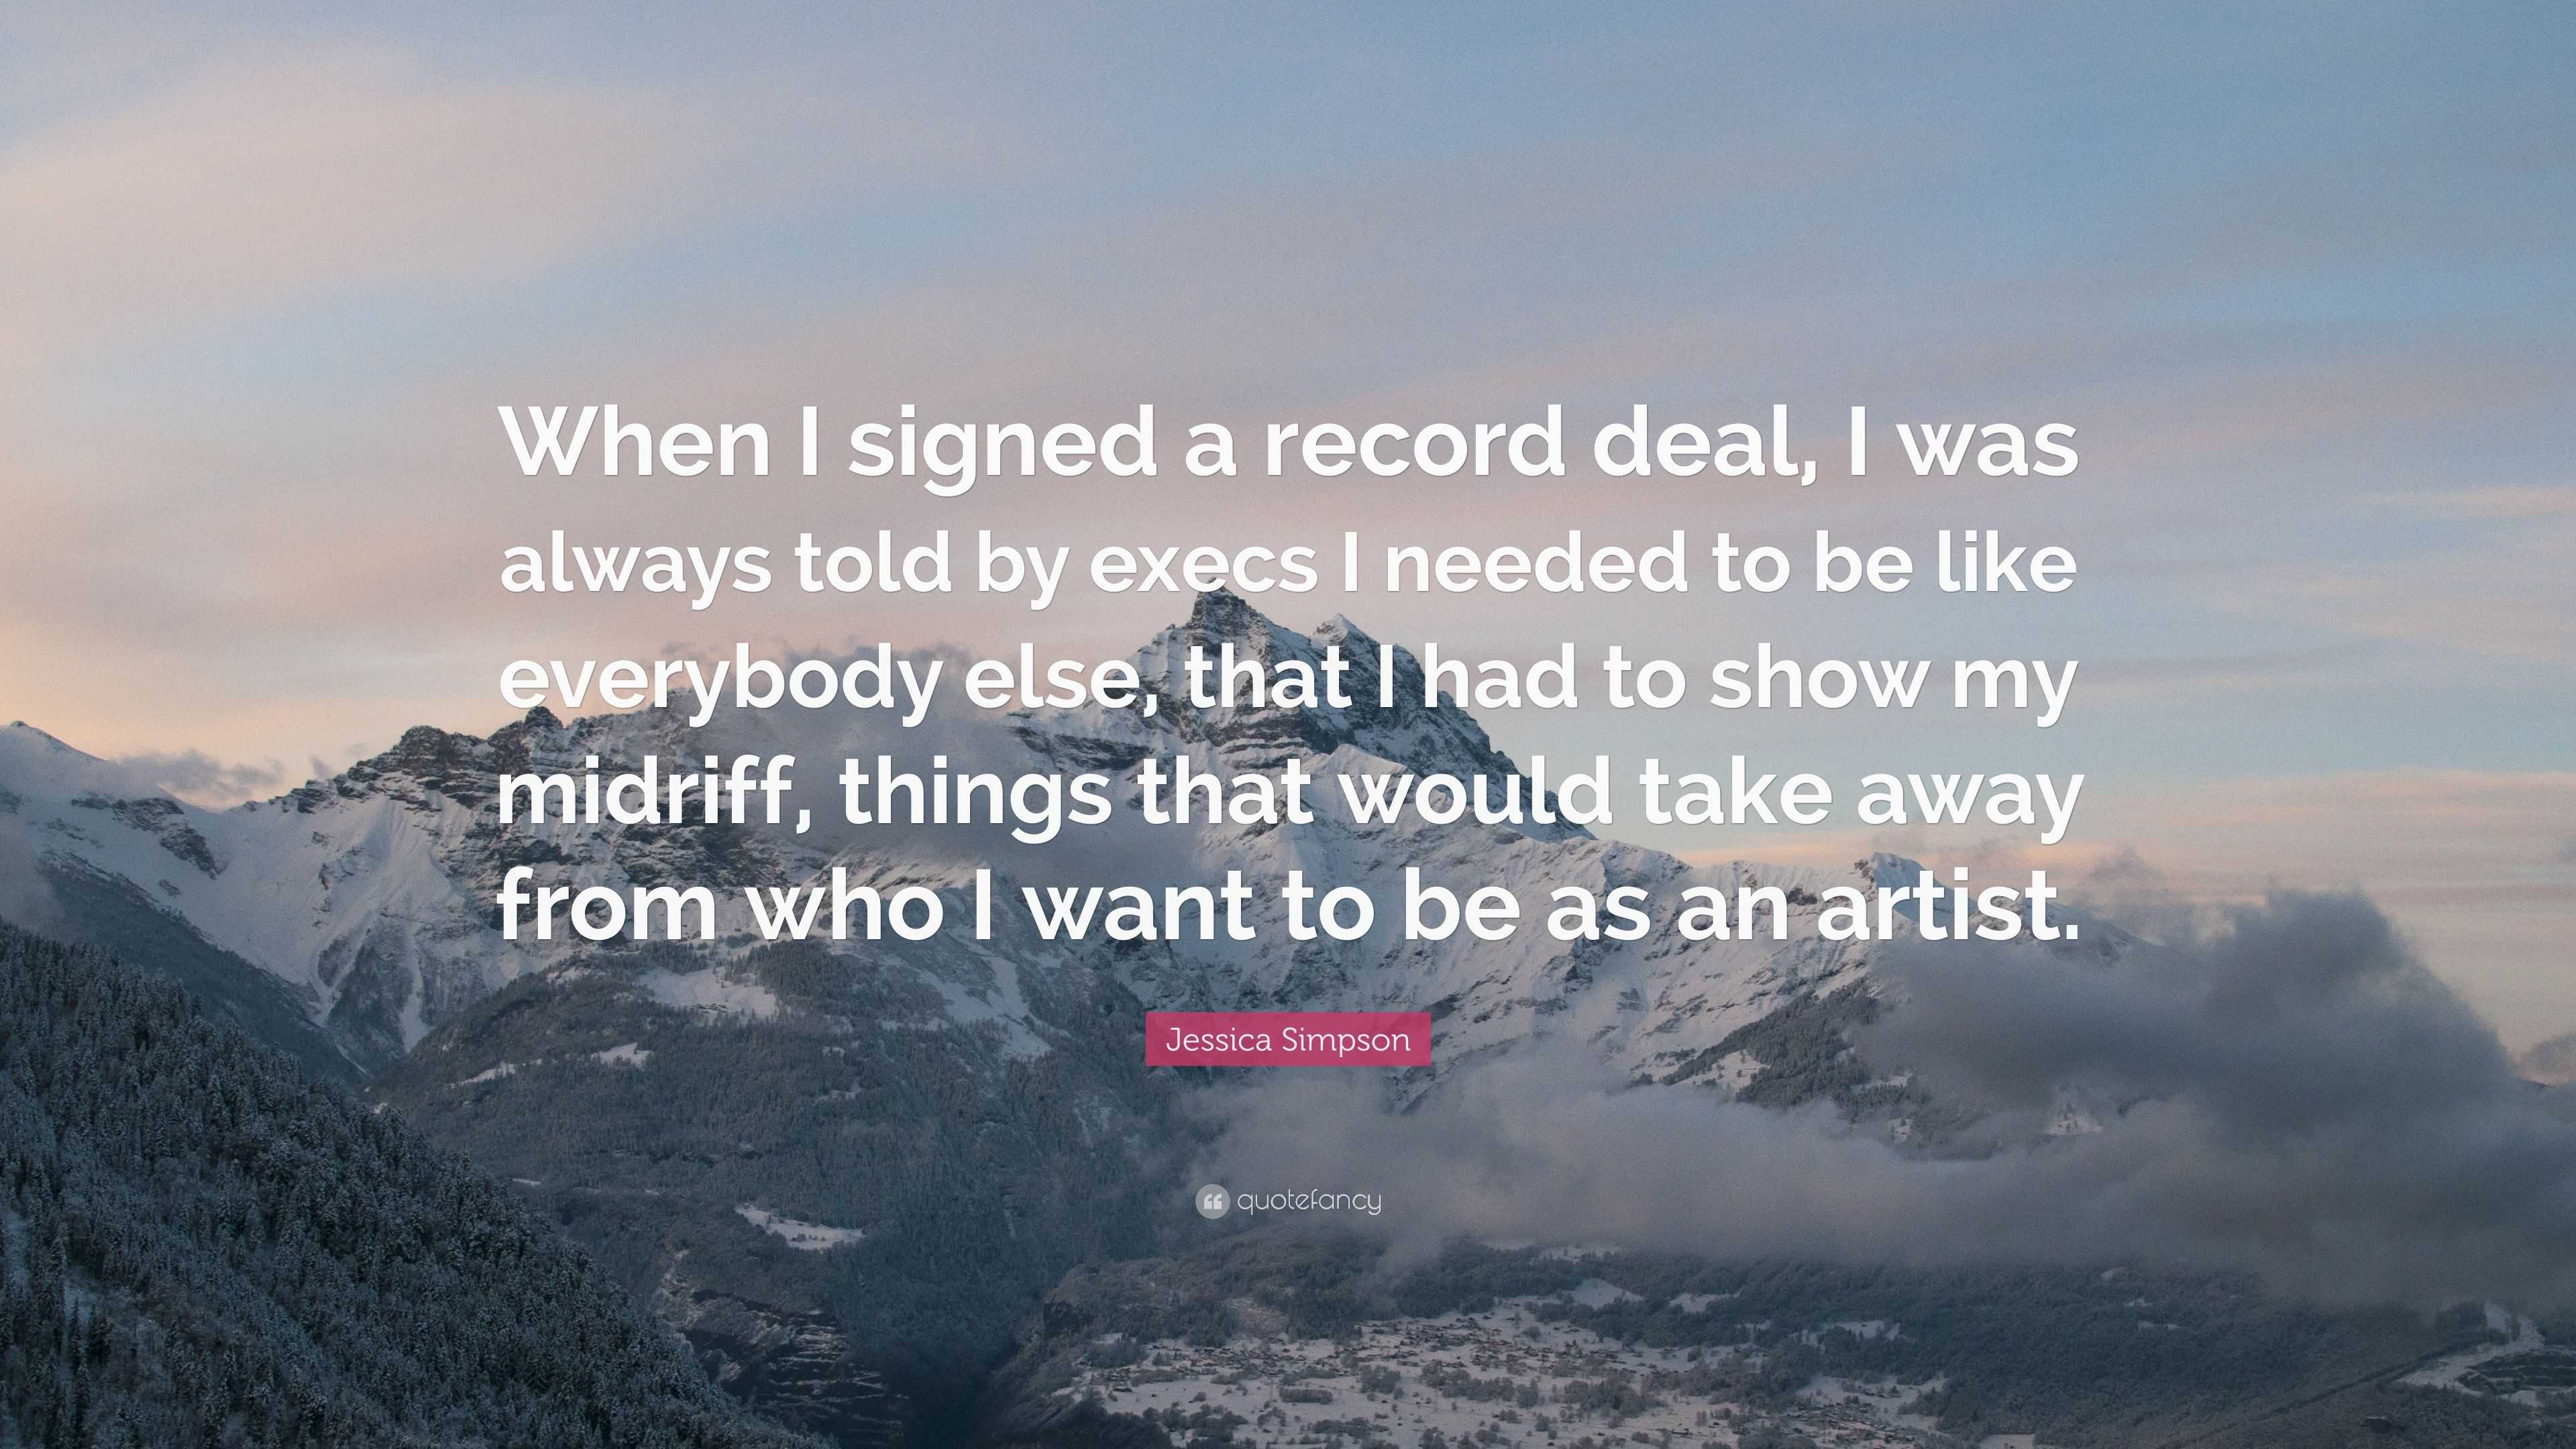 Jessica Simpson Signature Jessica Simpson Quote When I signed a record deal I was 